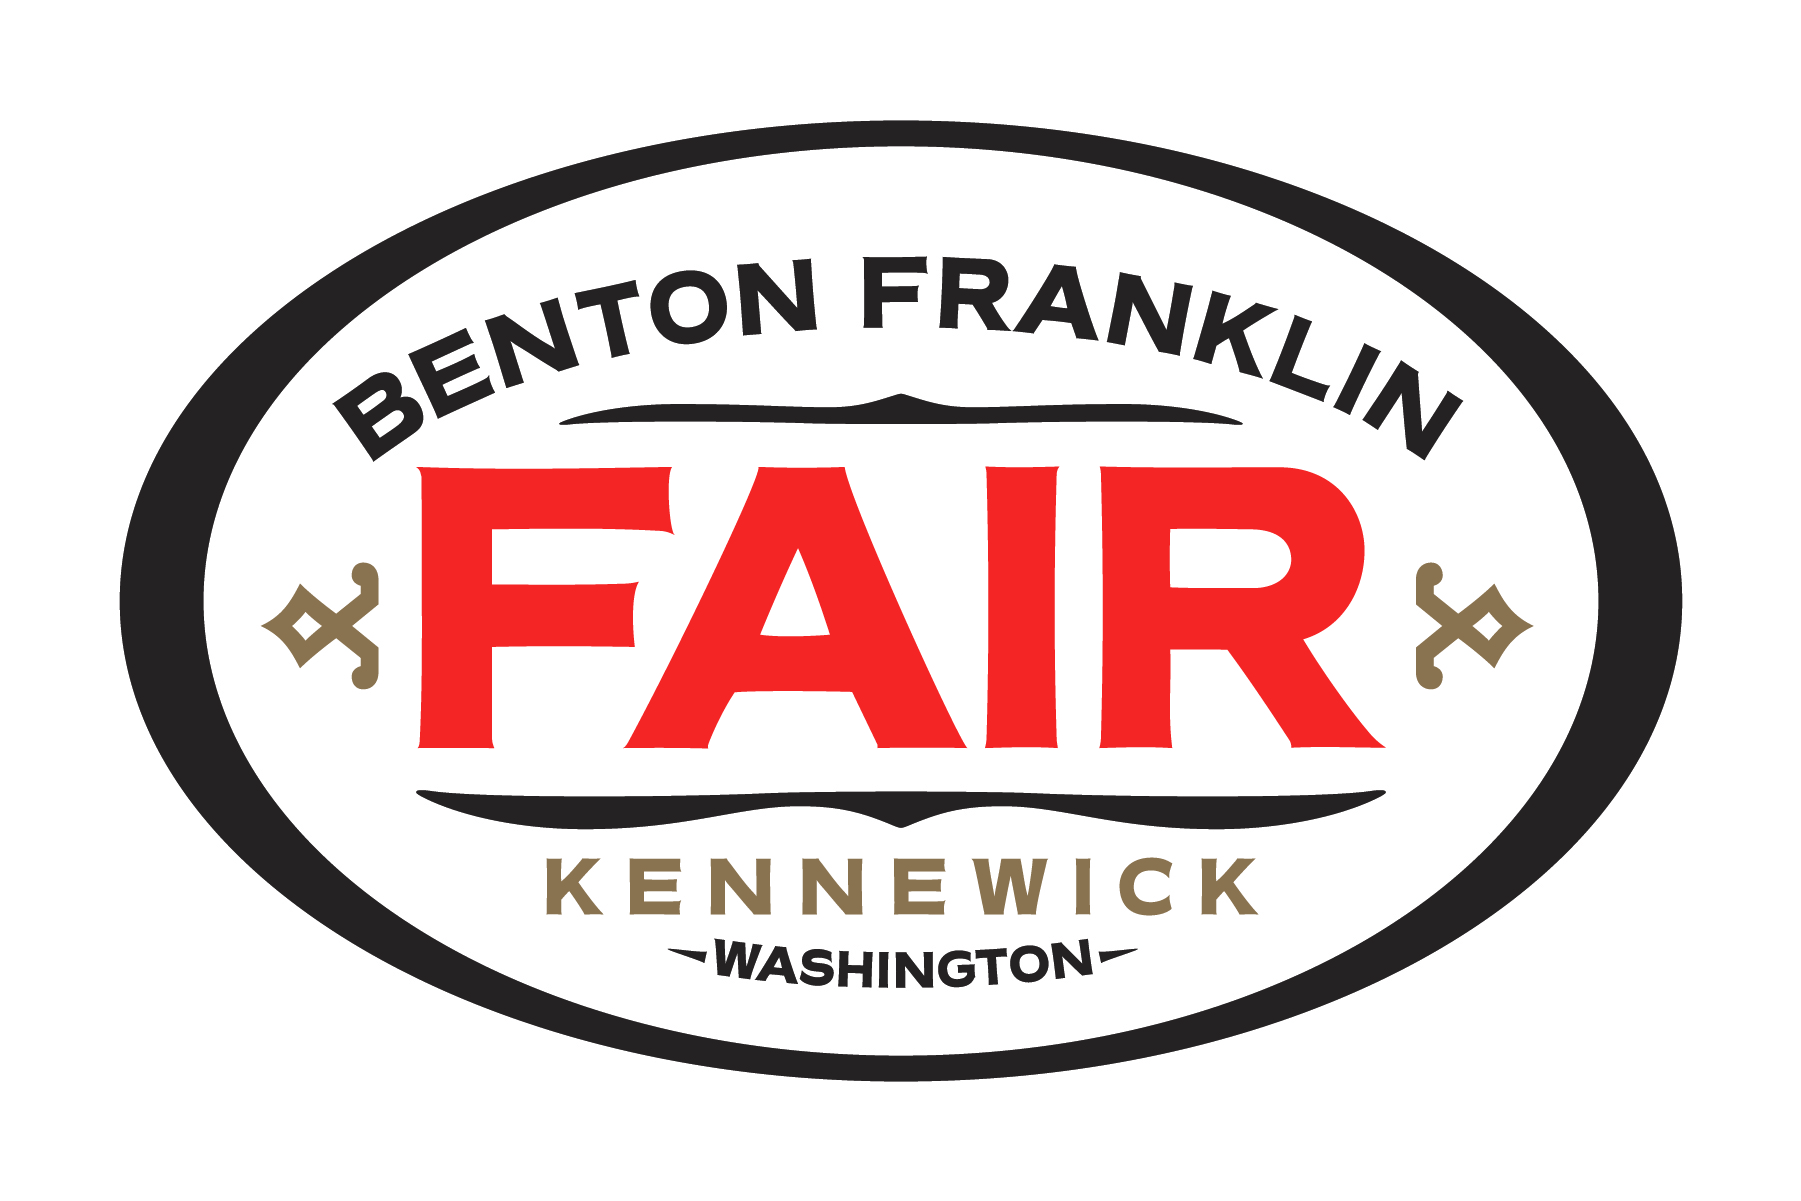 Benton Franklin County Fair and Rodeo